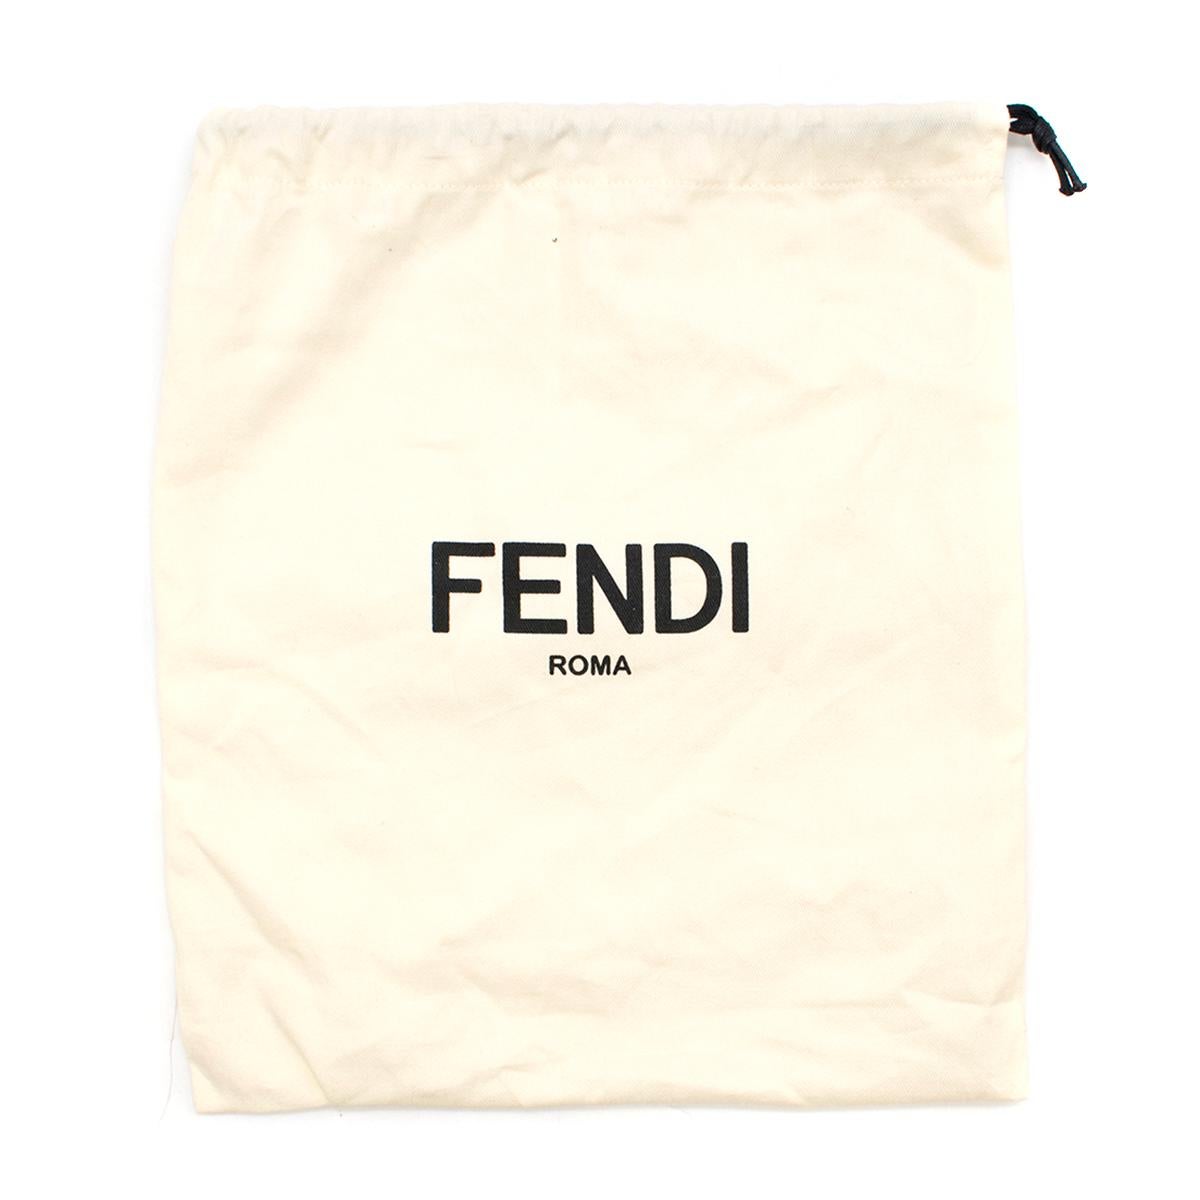 Fendi Studded Floral Applique Leather Mules Size 38 4